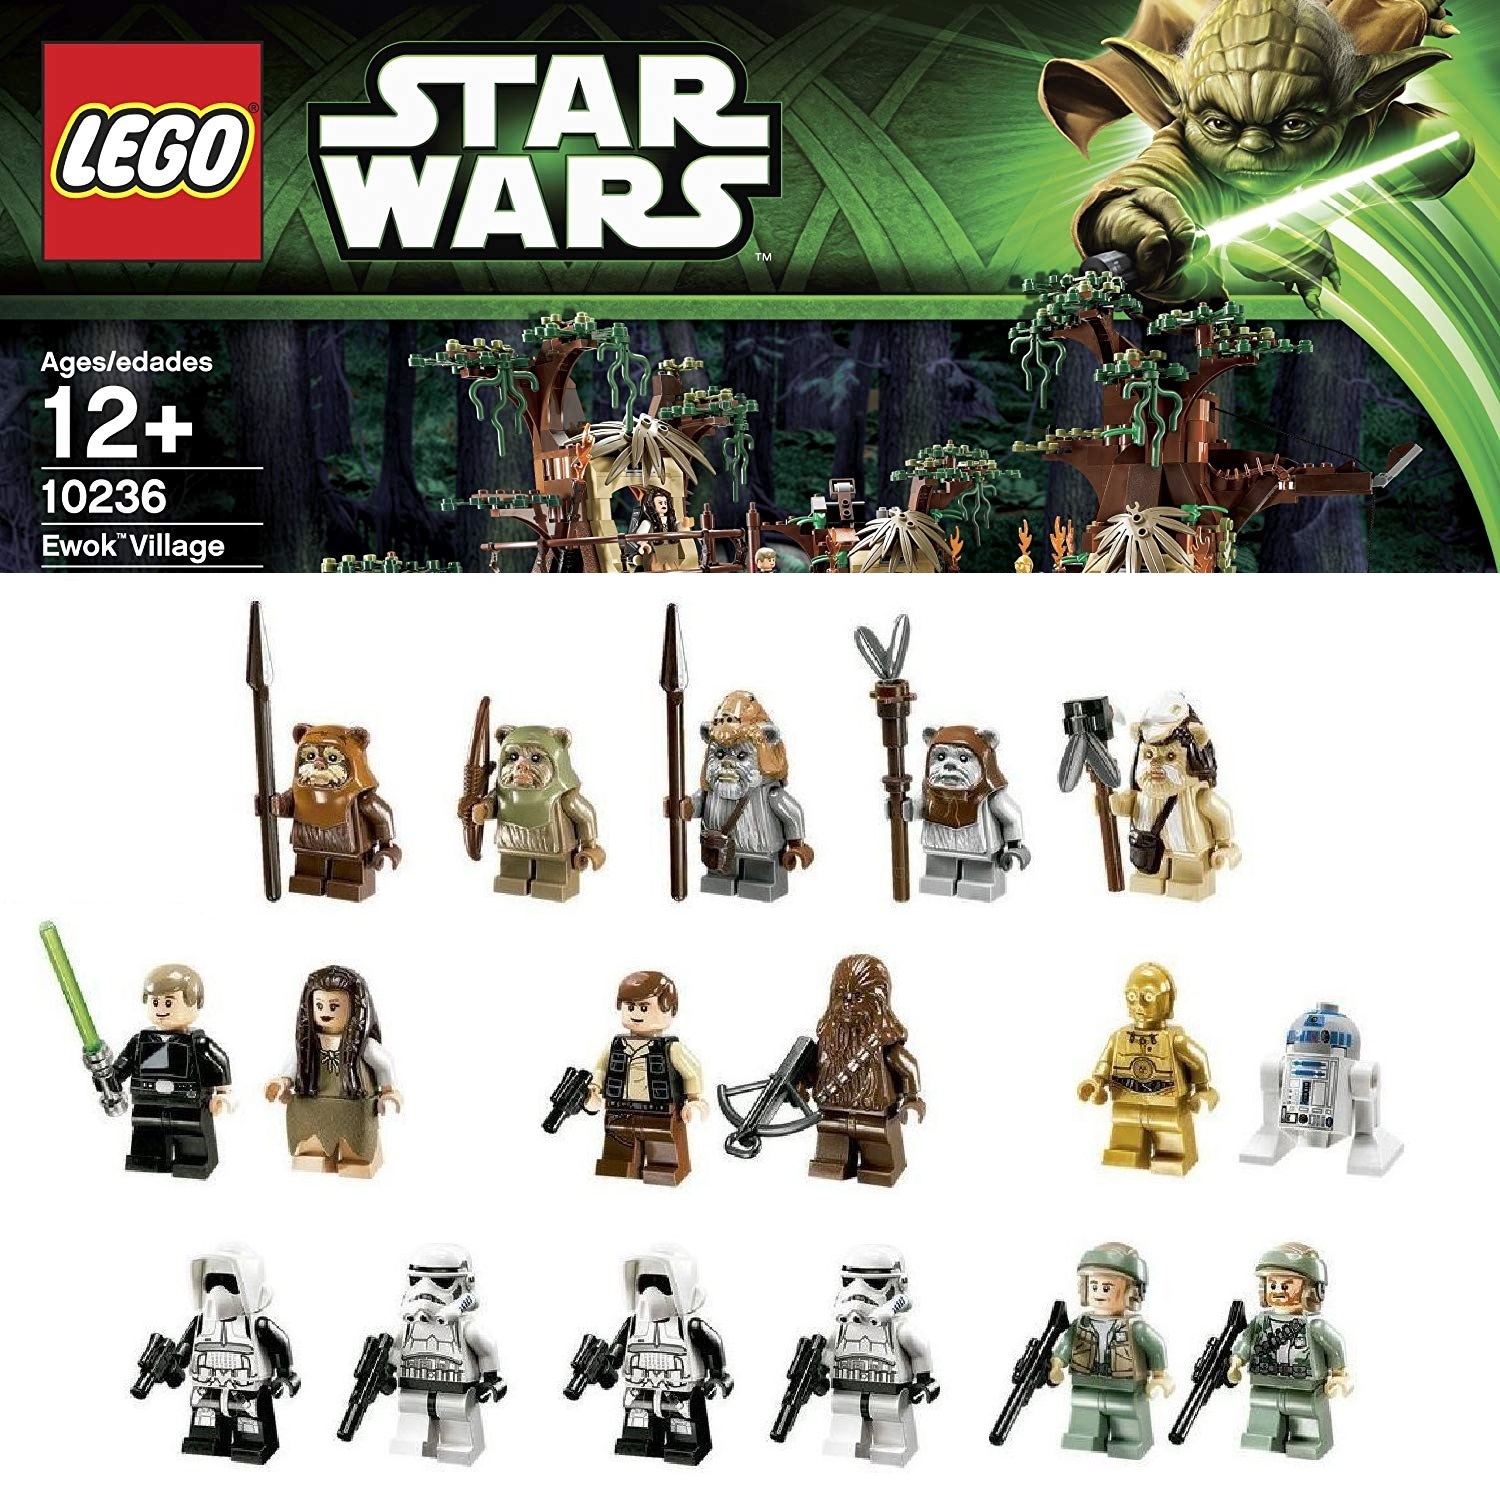 NEW LEGO Star Wars 10236 7956 8038 7139 COMPLETE EWOK SET 12 Minifigures Figures 